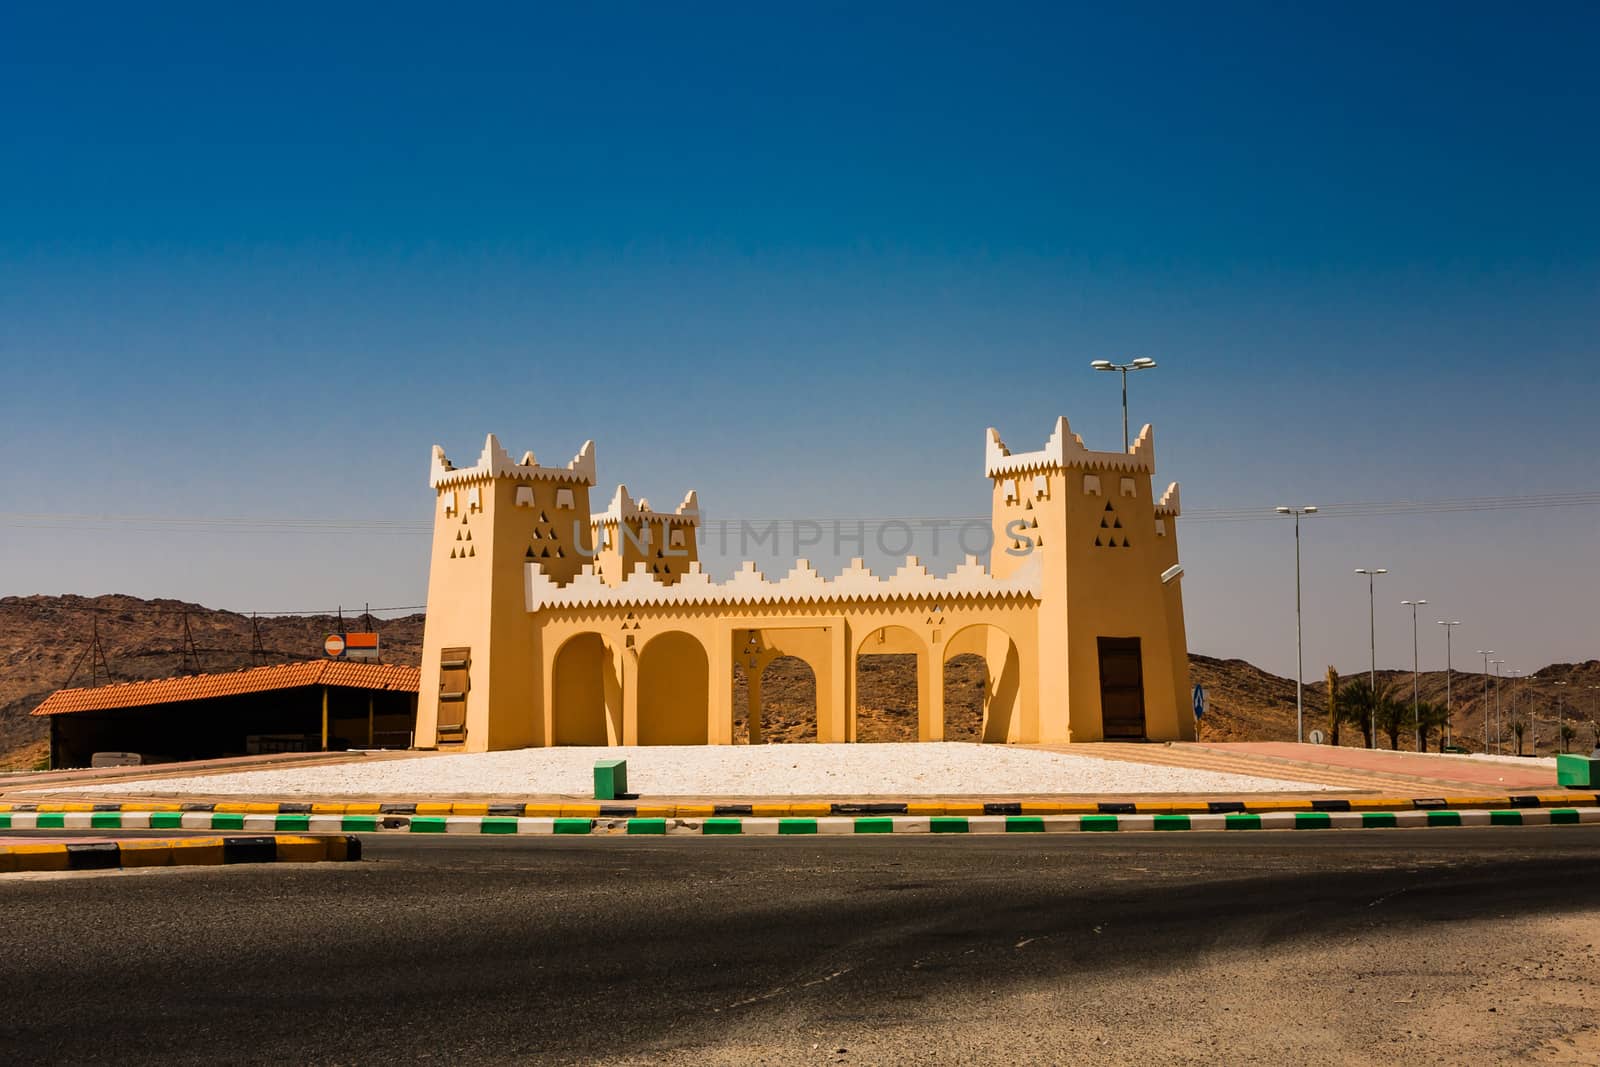 One of the many historic replicas in Saudi Arabia